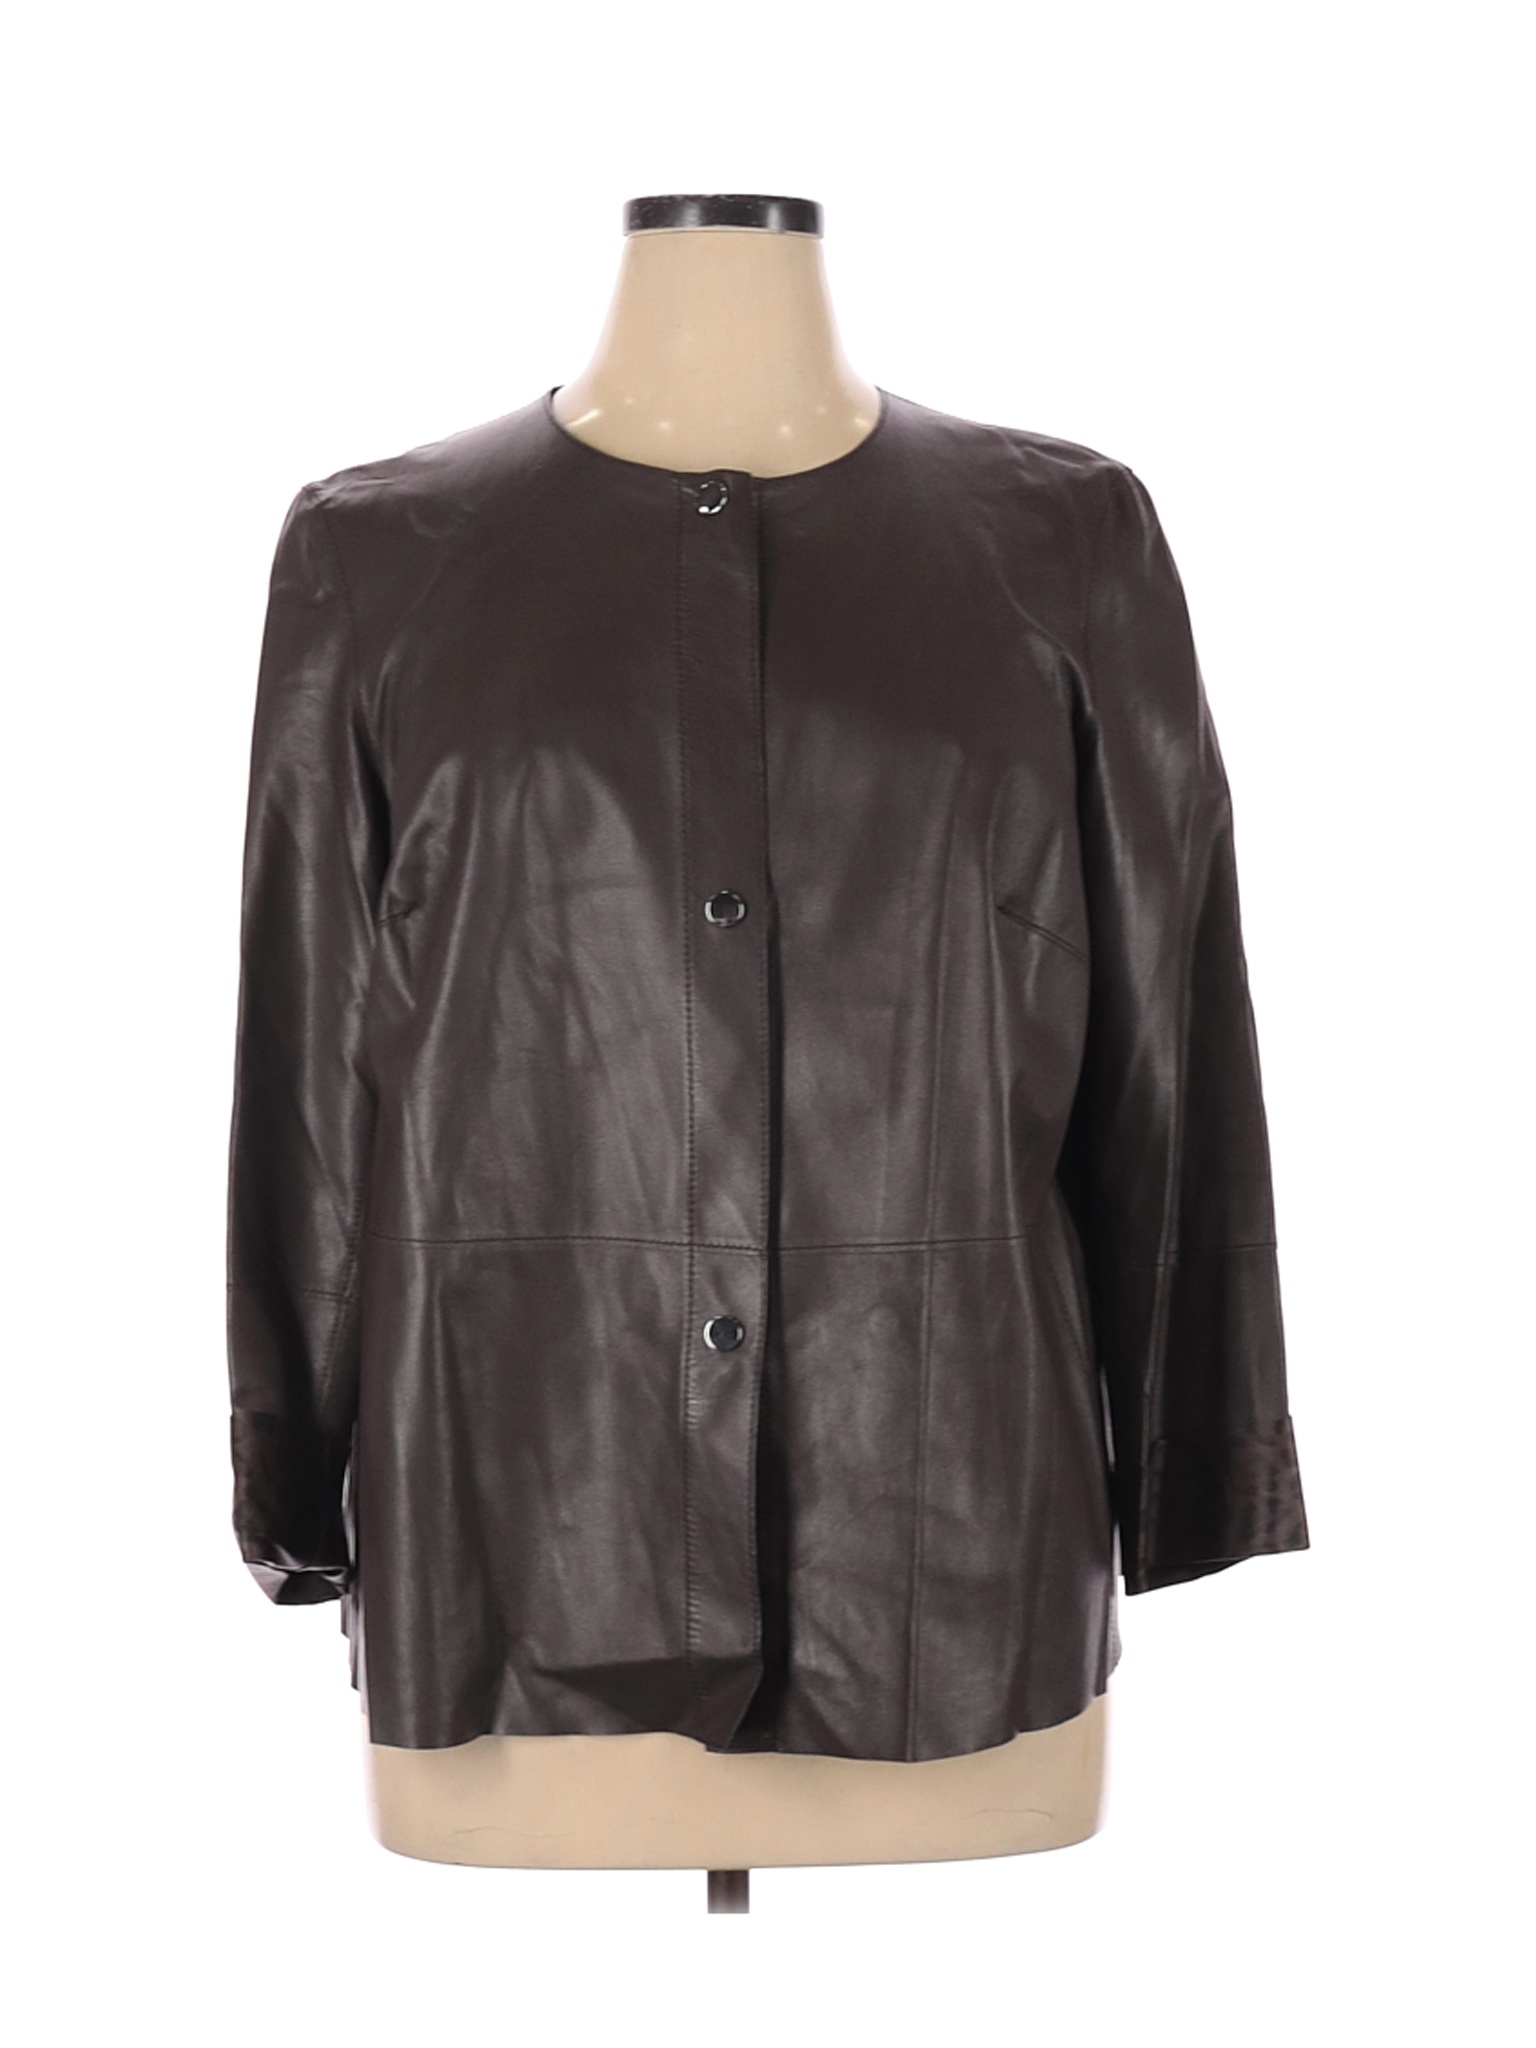 Lafayette 148 New York Women Brown Leather Jacket 14 | eBay